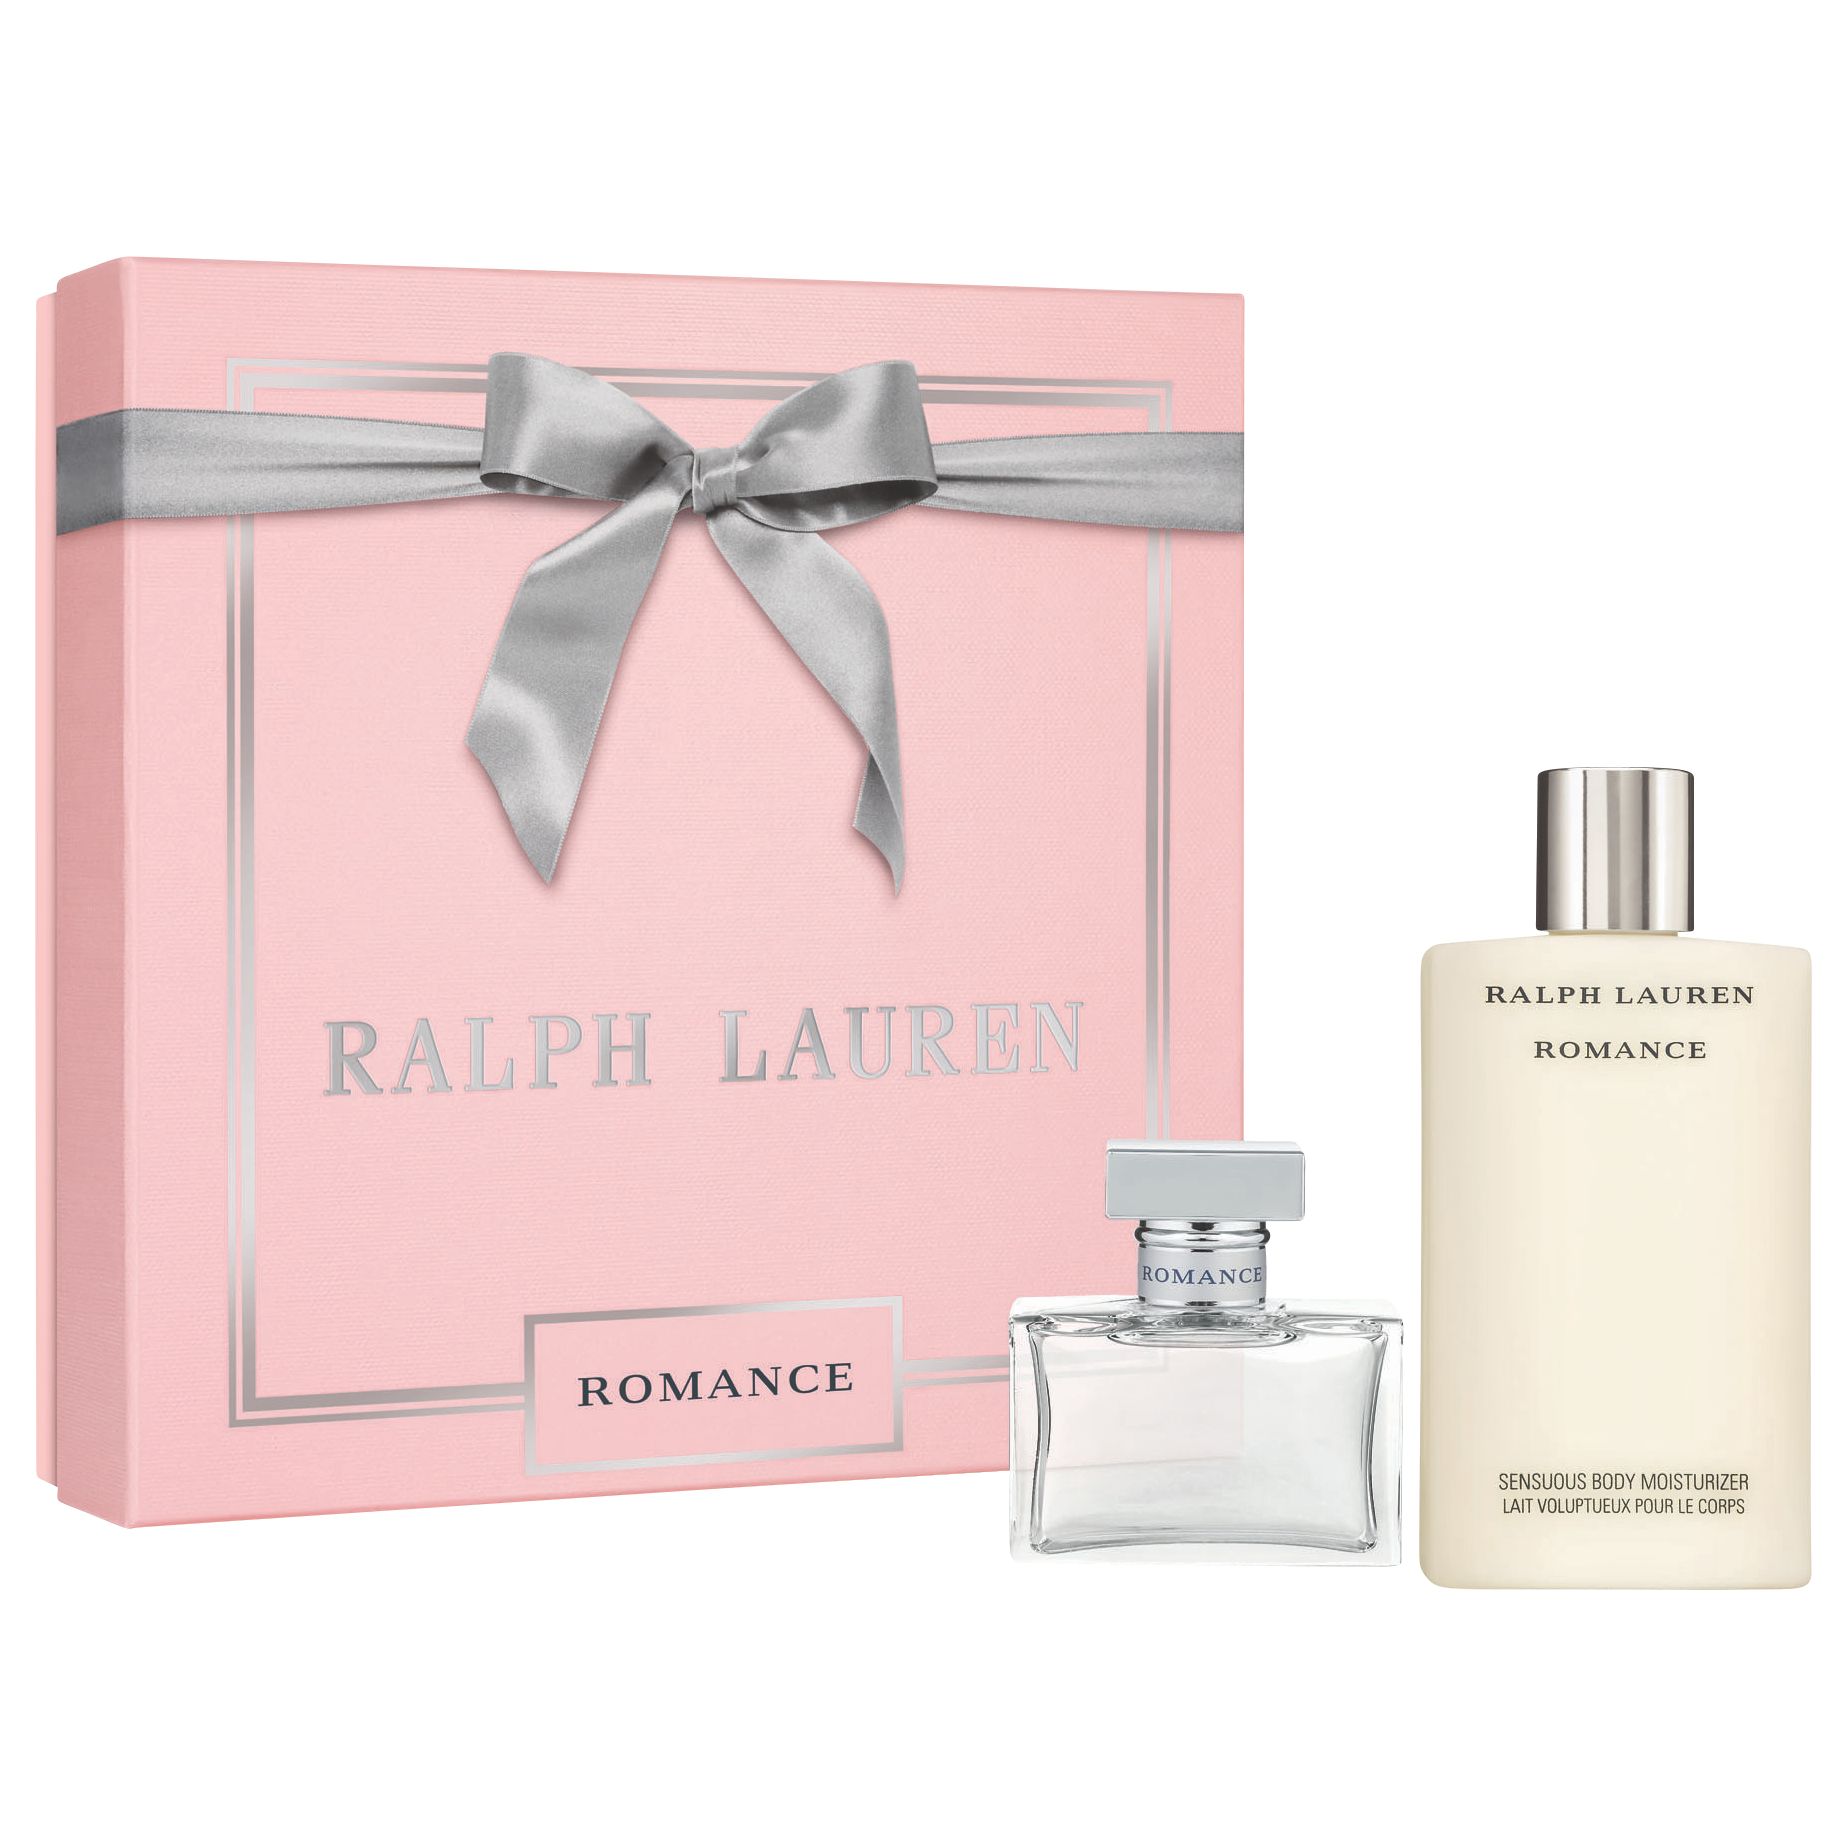 romance perfume gift set